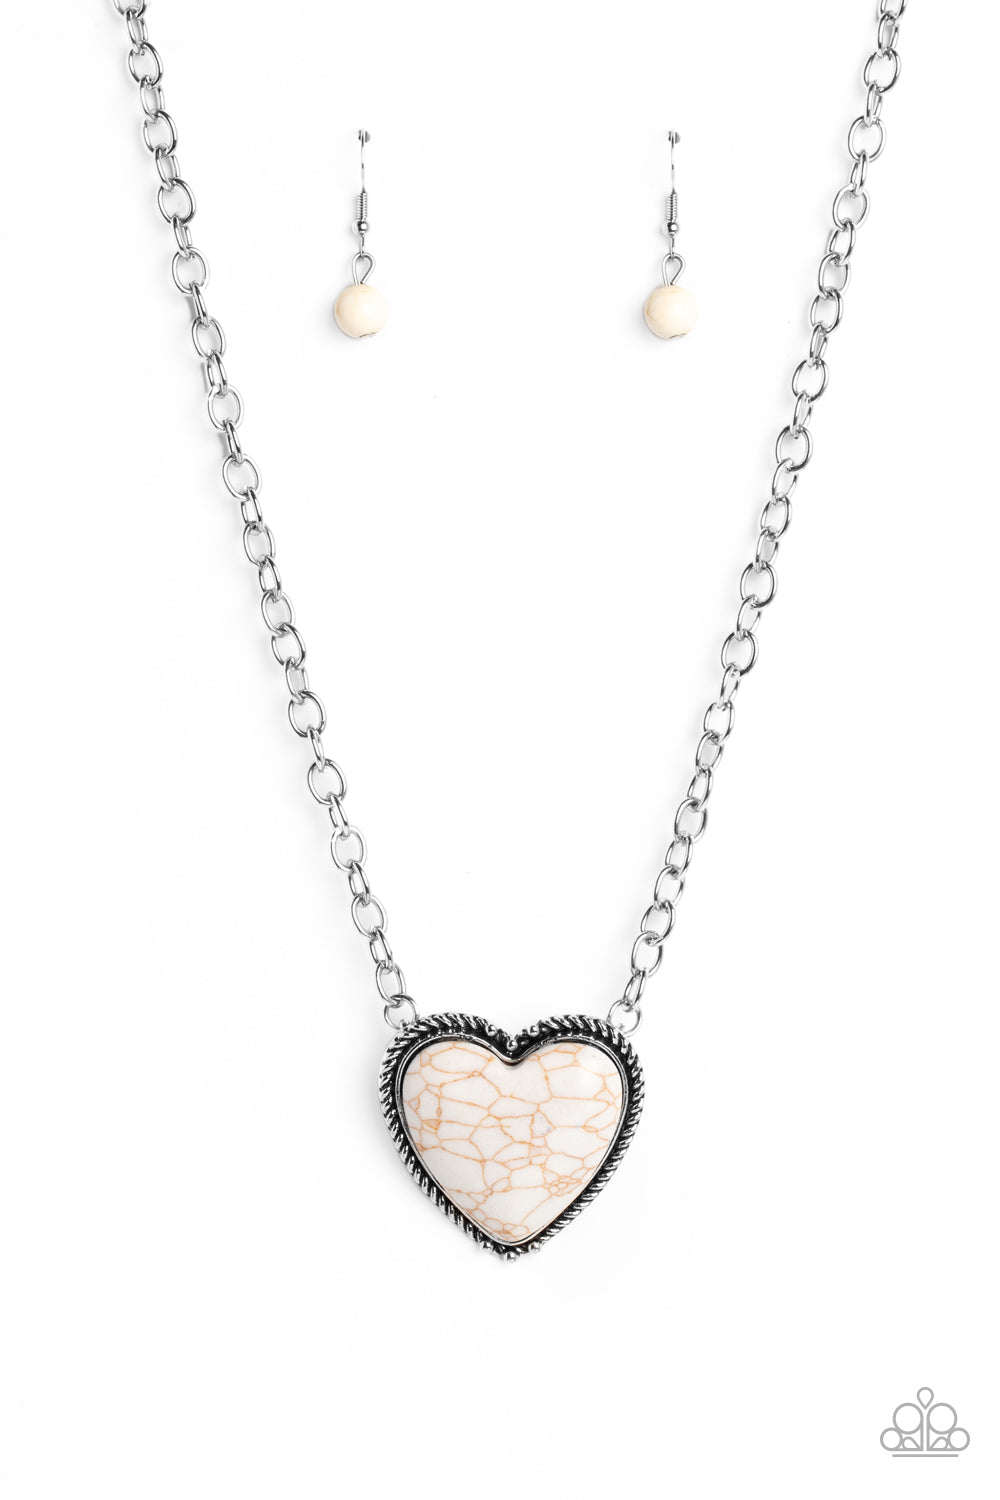 Authentic Admirer White Necklace Paparazzi Accessories. White Stone Heart Pendant Necklace.